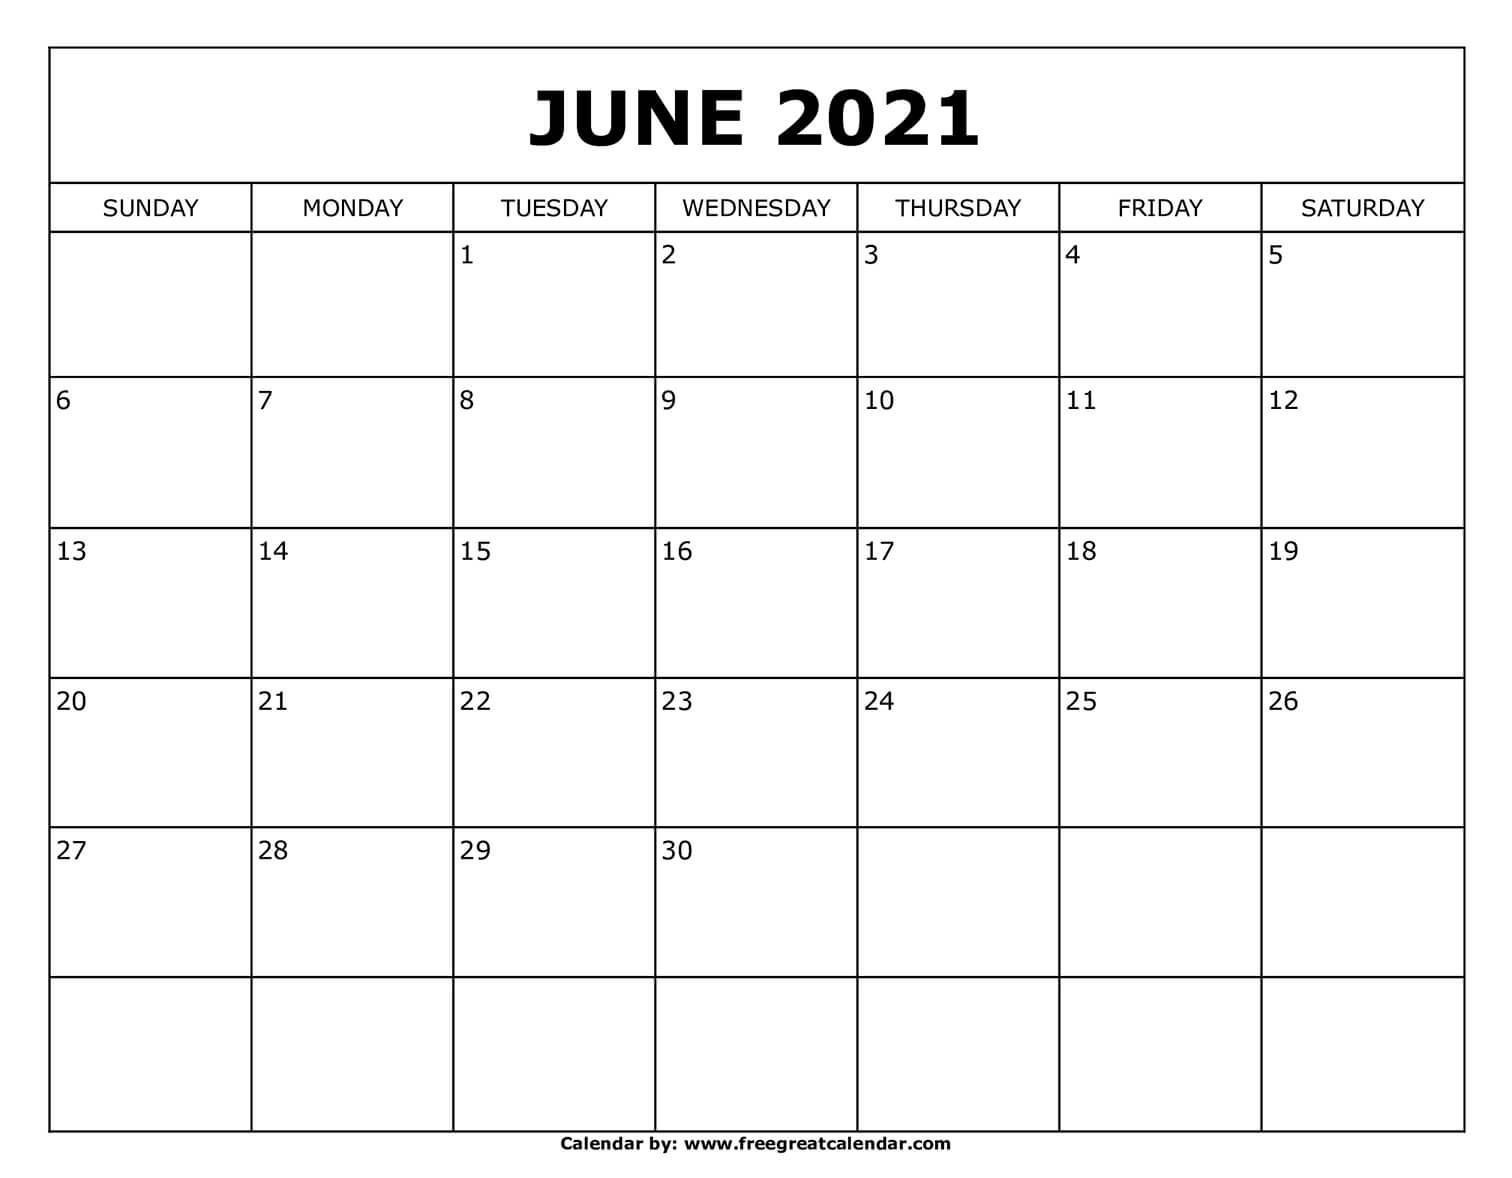 Methodist 2021 Calendar - Template Calendar Design  United Methodist Church Lectionary June 14, 2021